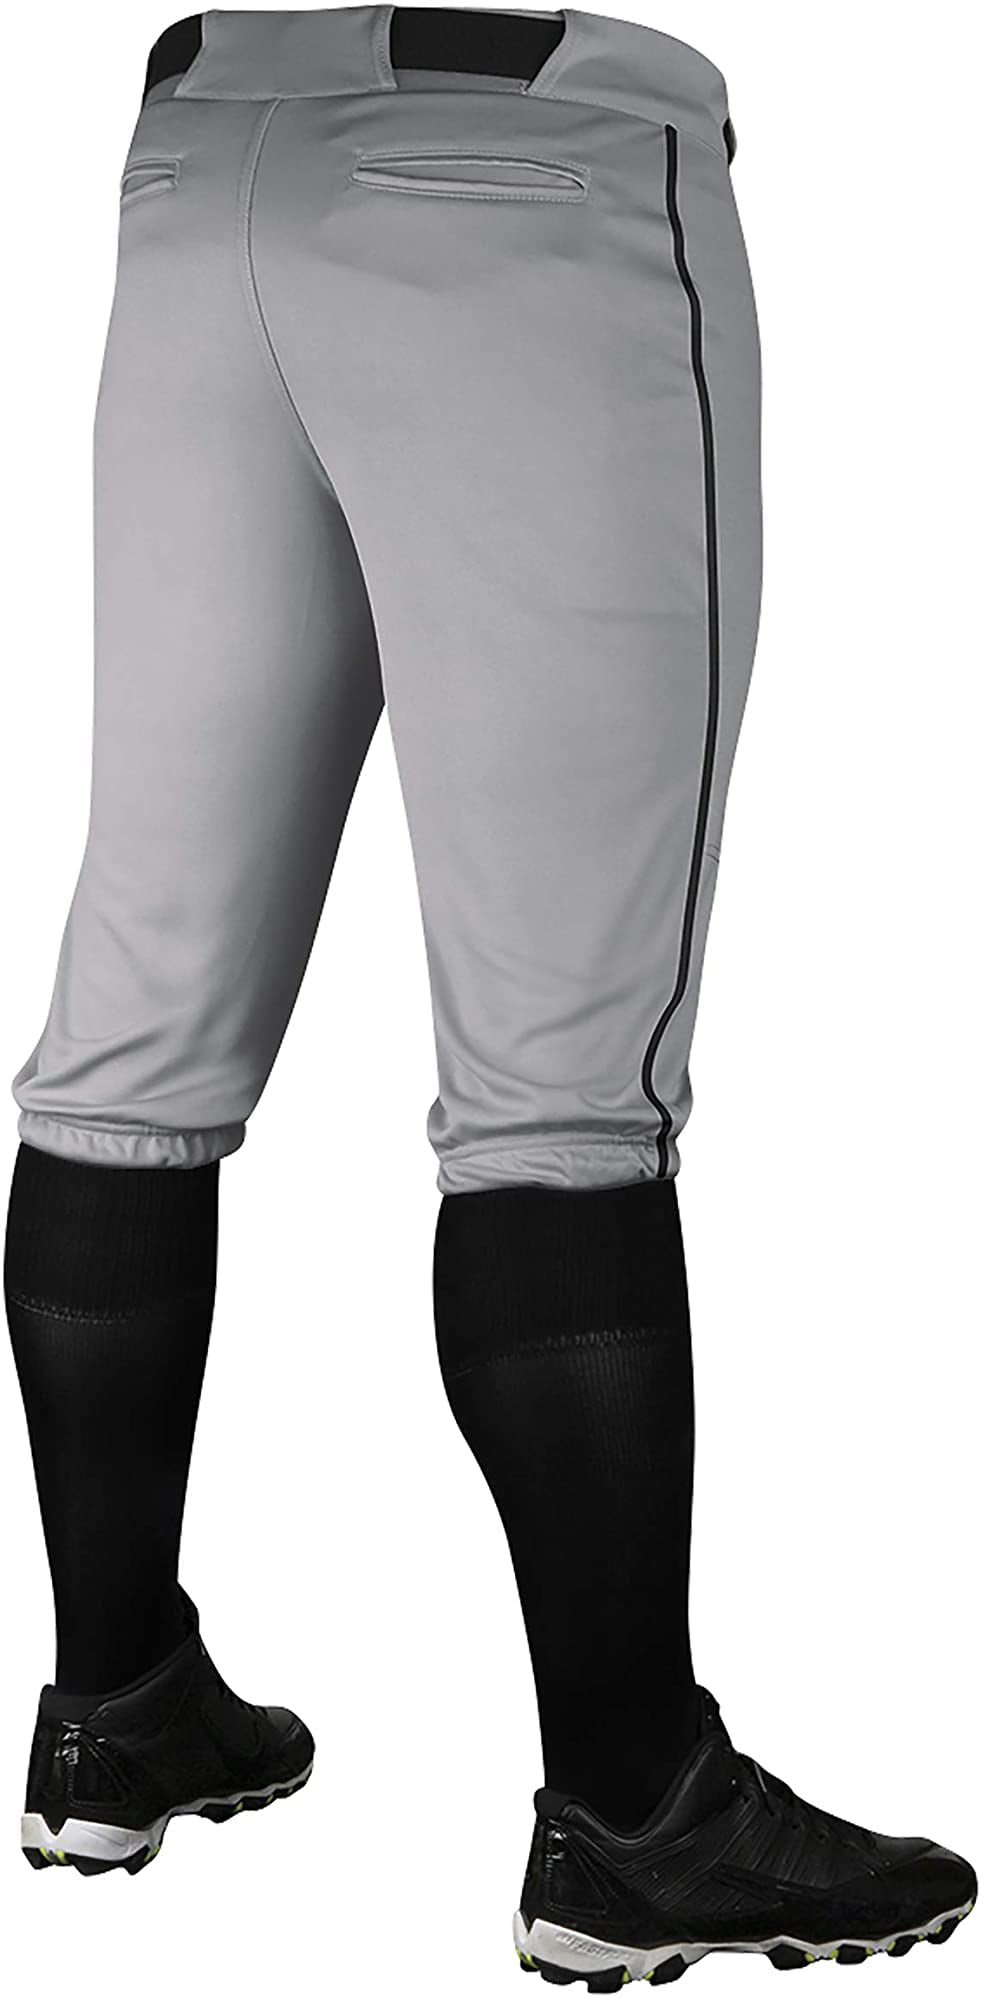 Sizes Champro Men's Triple Crown Knicker Baseball Pants All Colors 